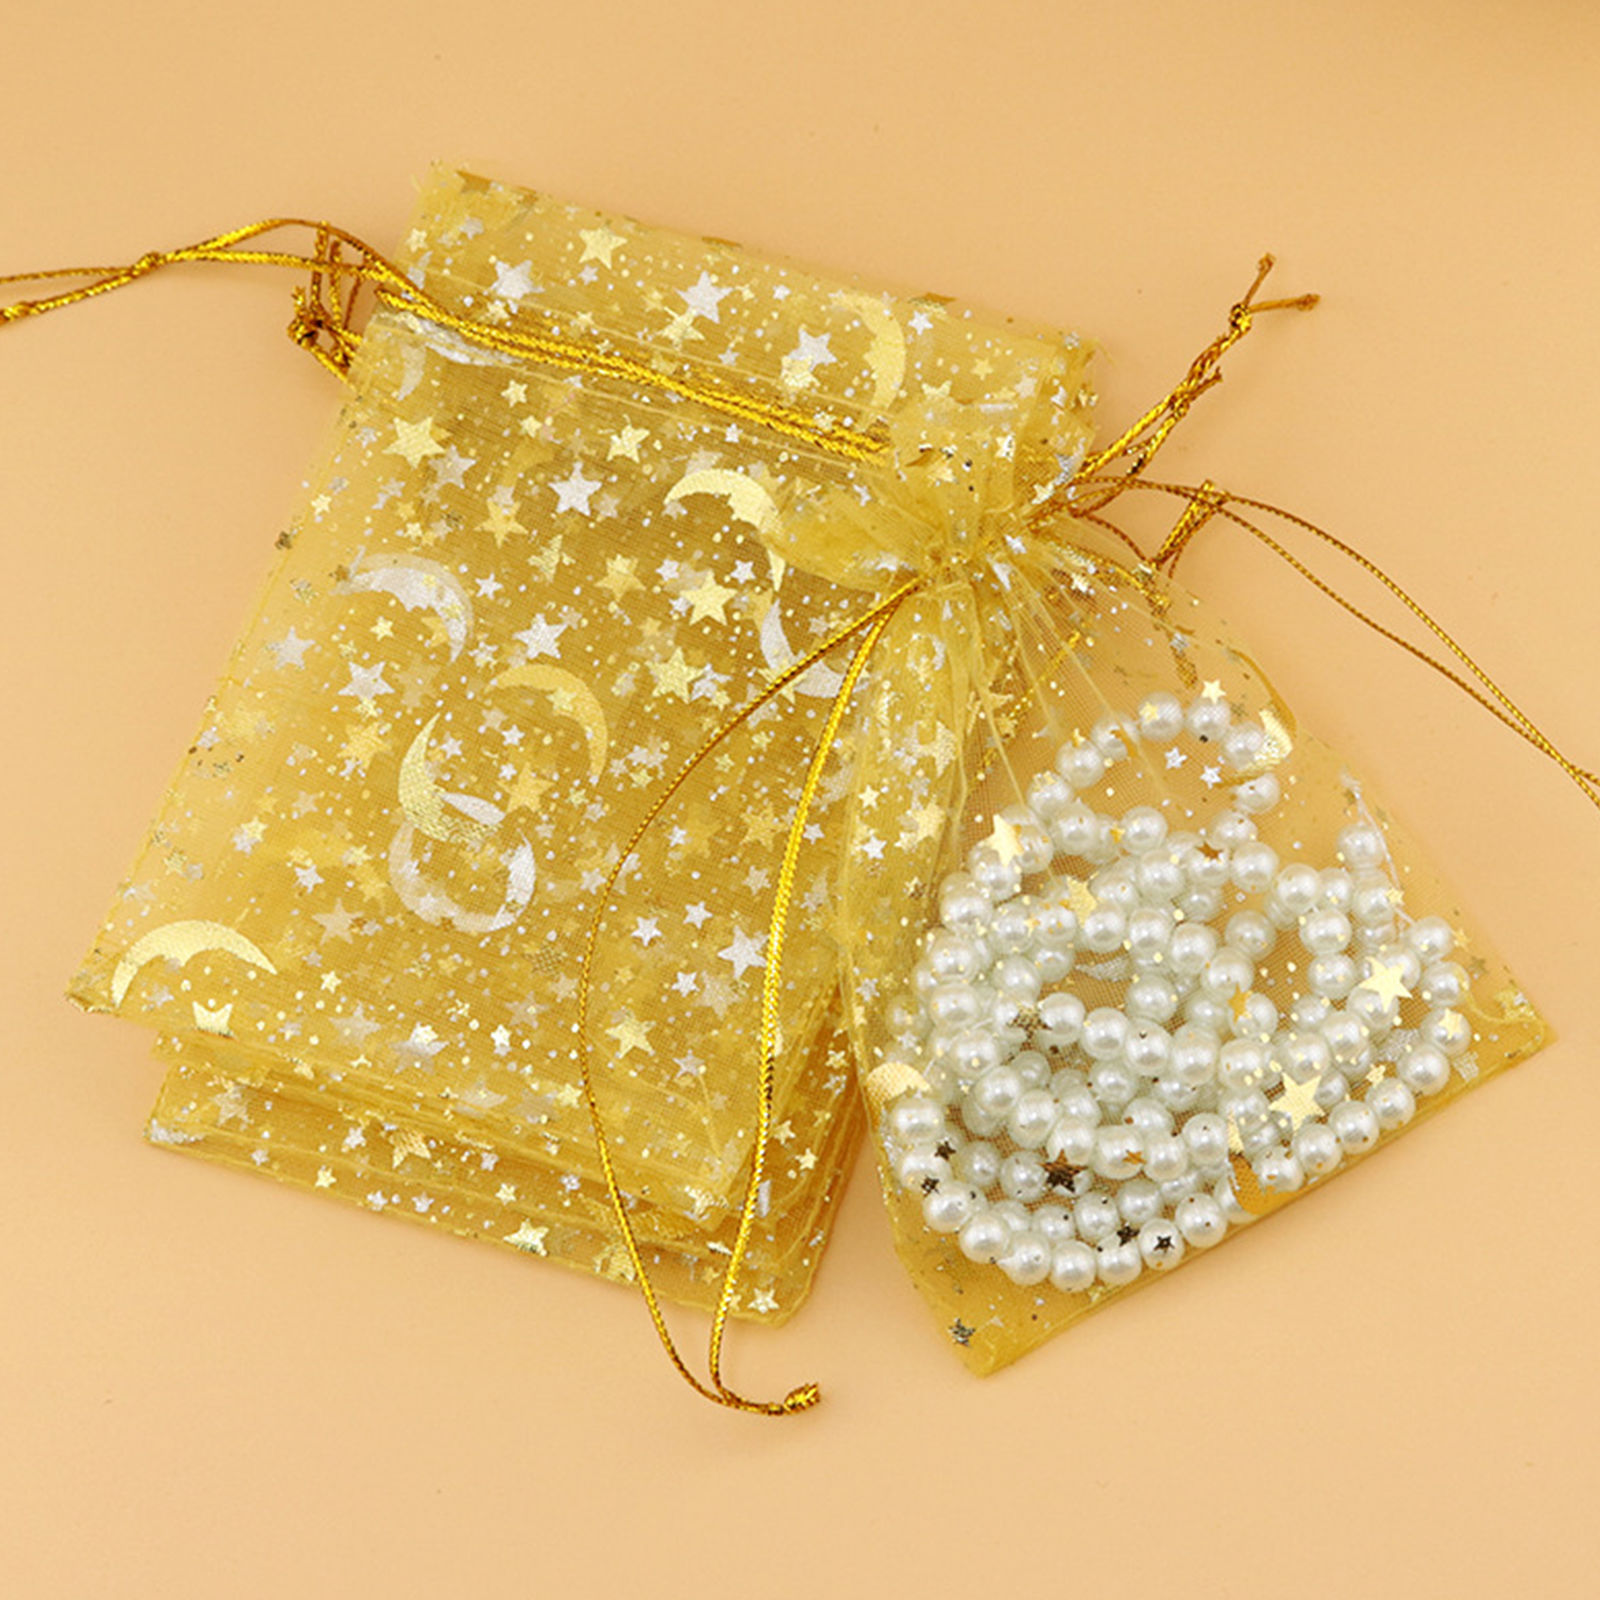 Picture of Wedding Gift Organza Galaxy Drawstring Bags Half Moon Golden Star 12cm x9cm(4 6/8" x3 4/8"), 20 PCs